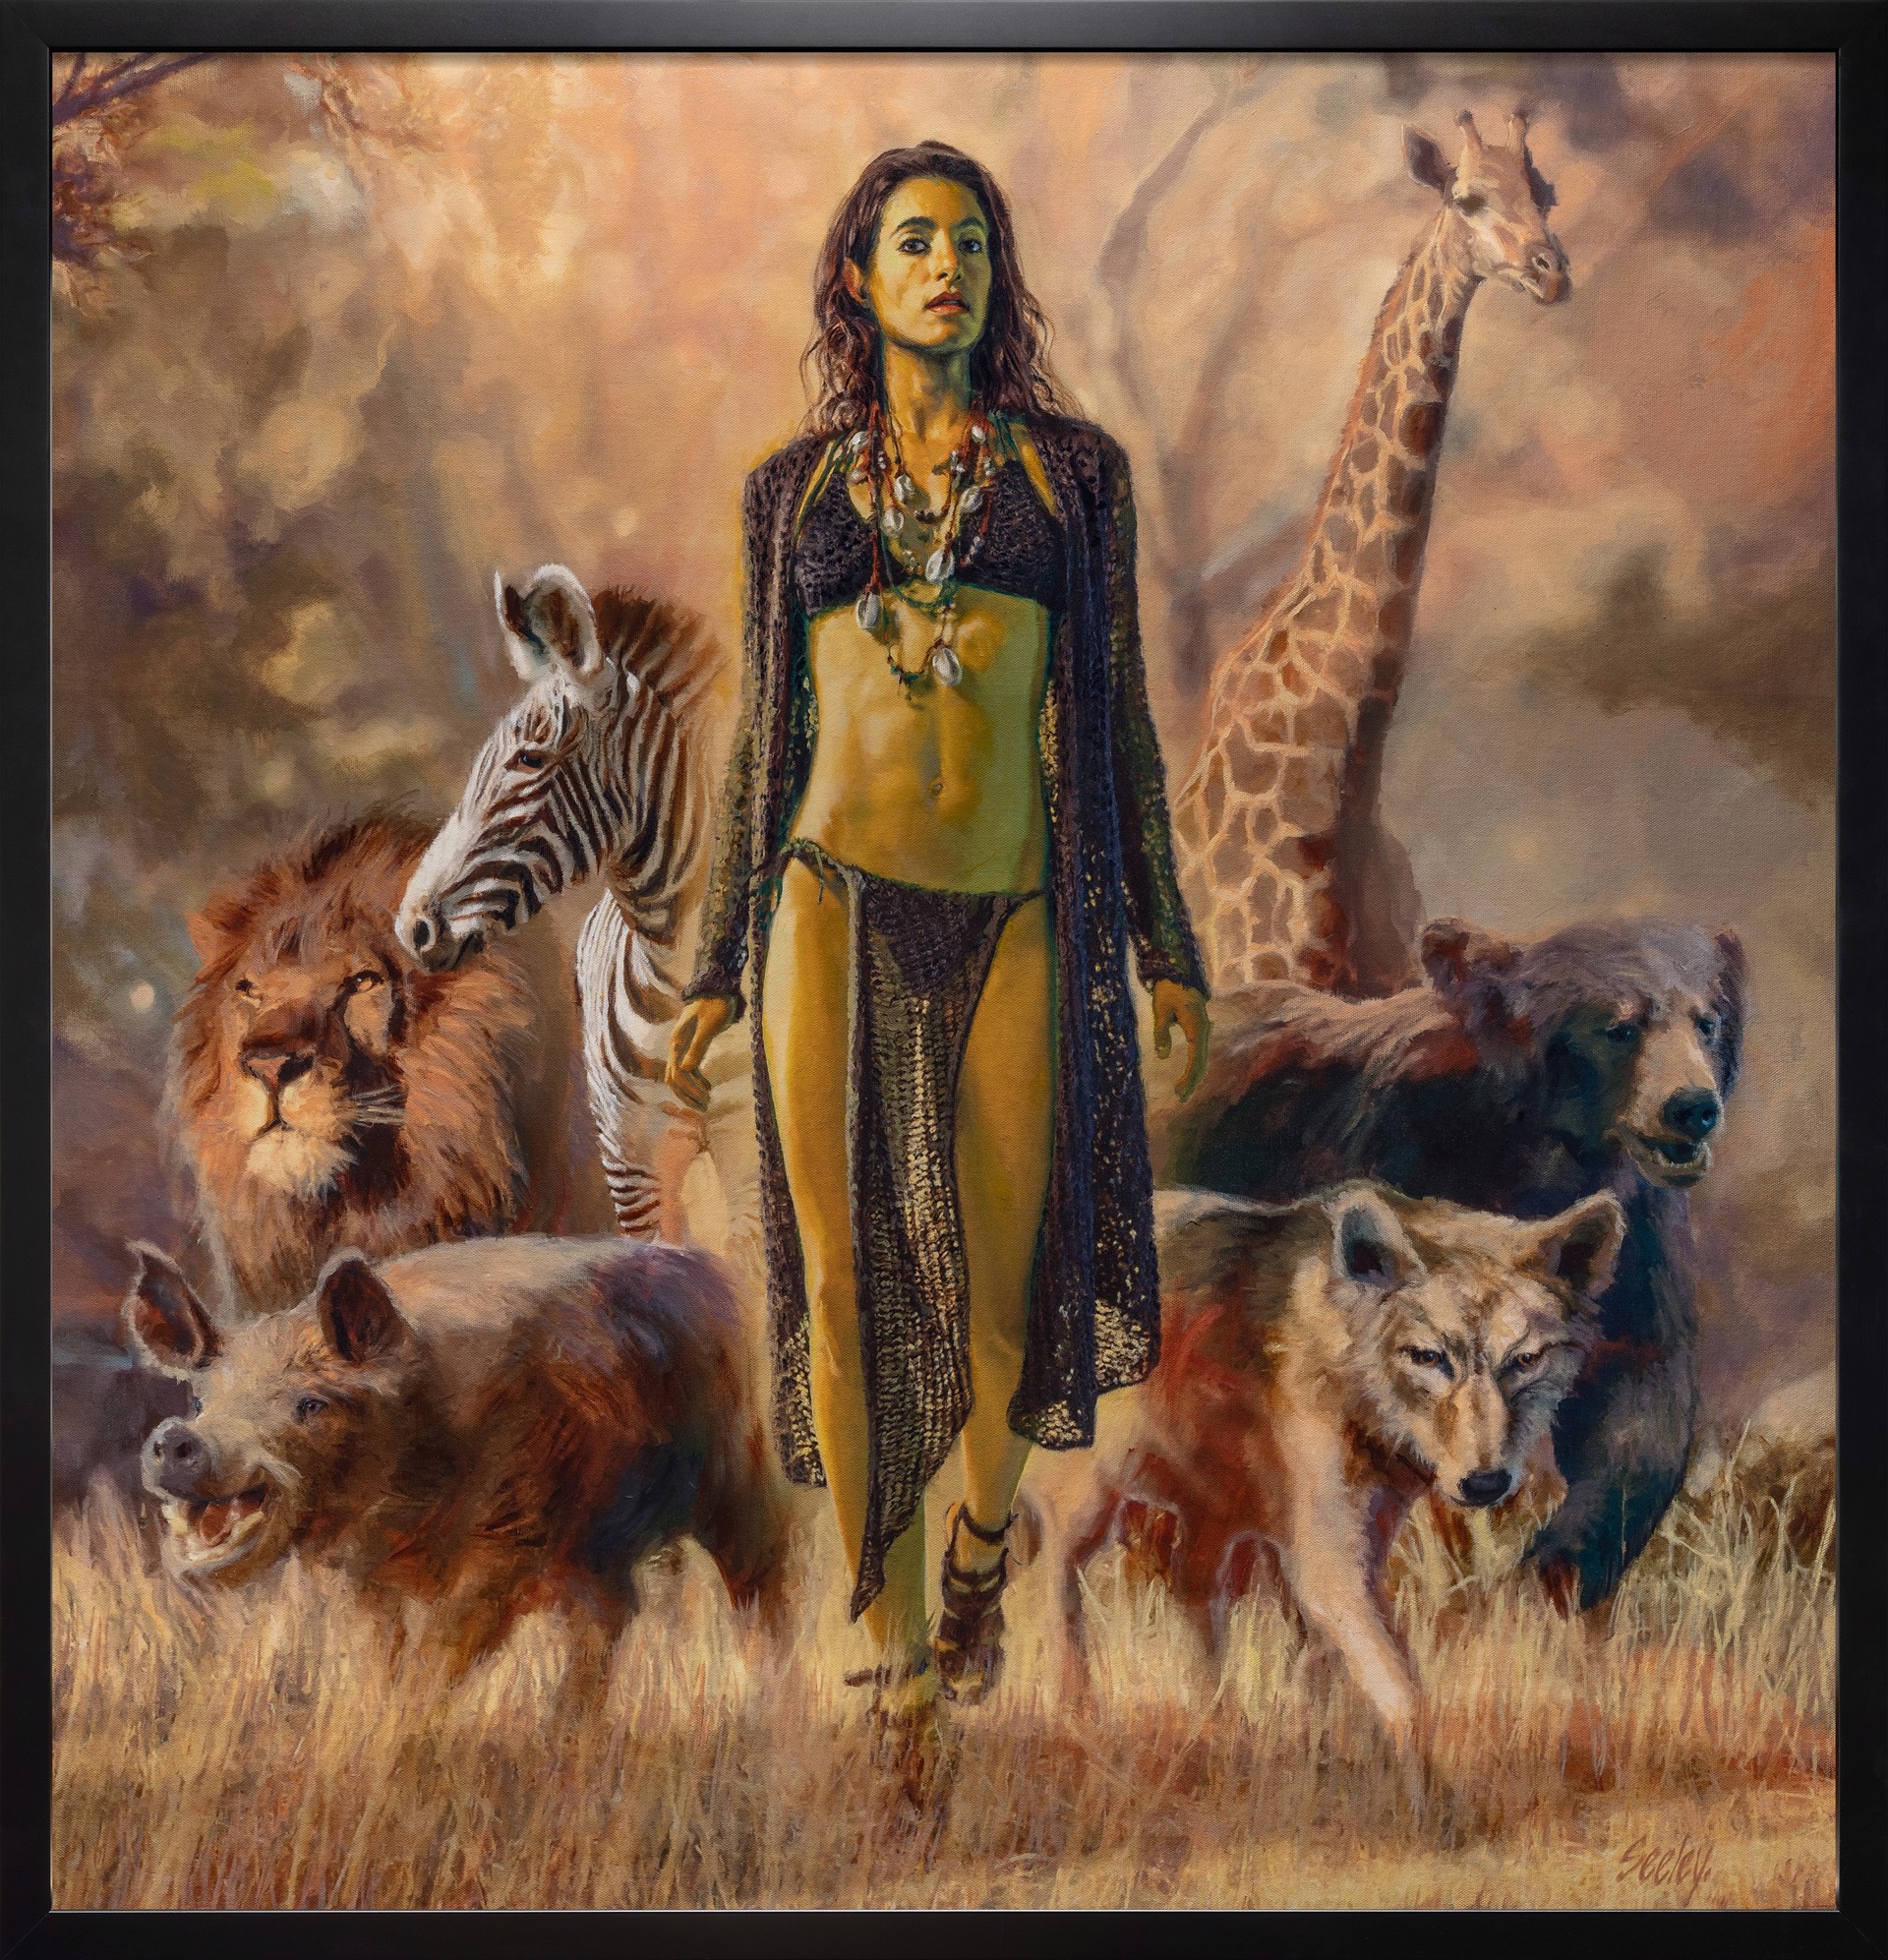 The Goddess Animalia by Dave Seeley